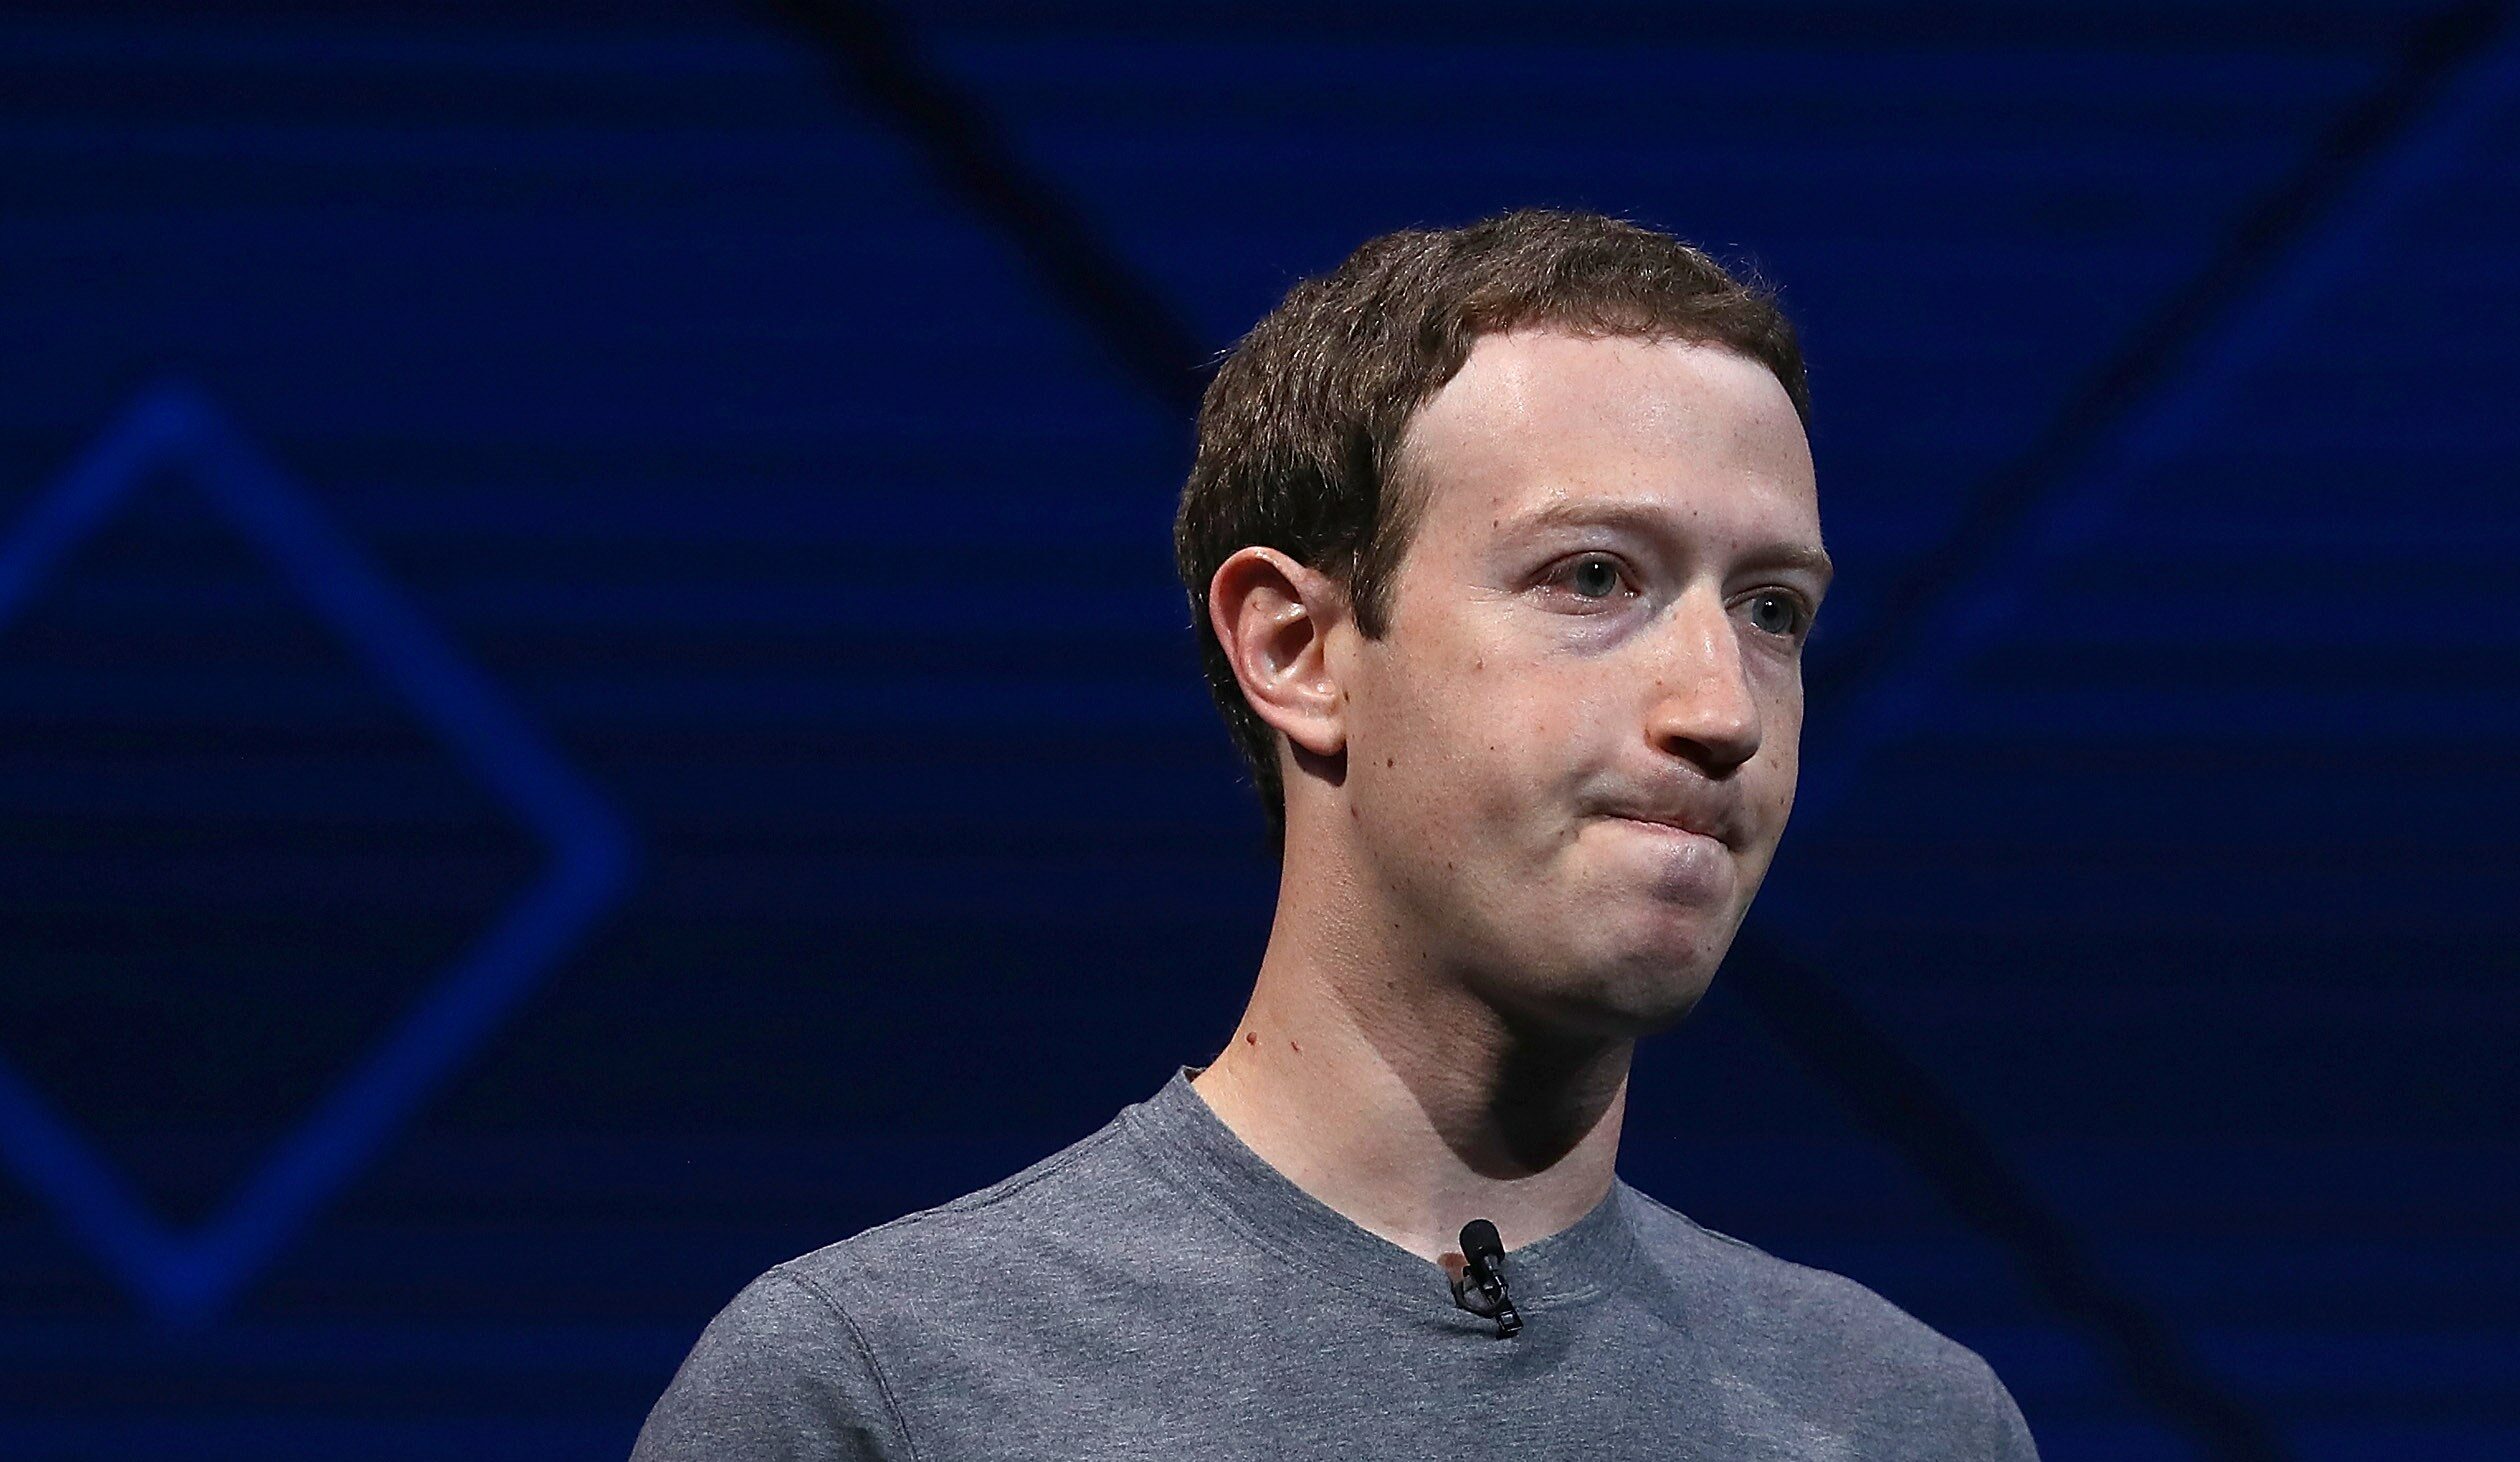 Facebook datacenter Zeewolde mark Zuckerberg